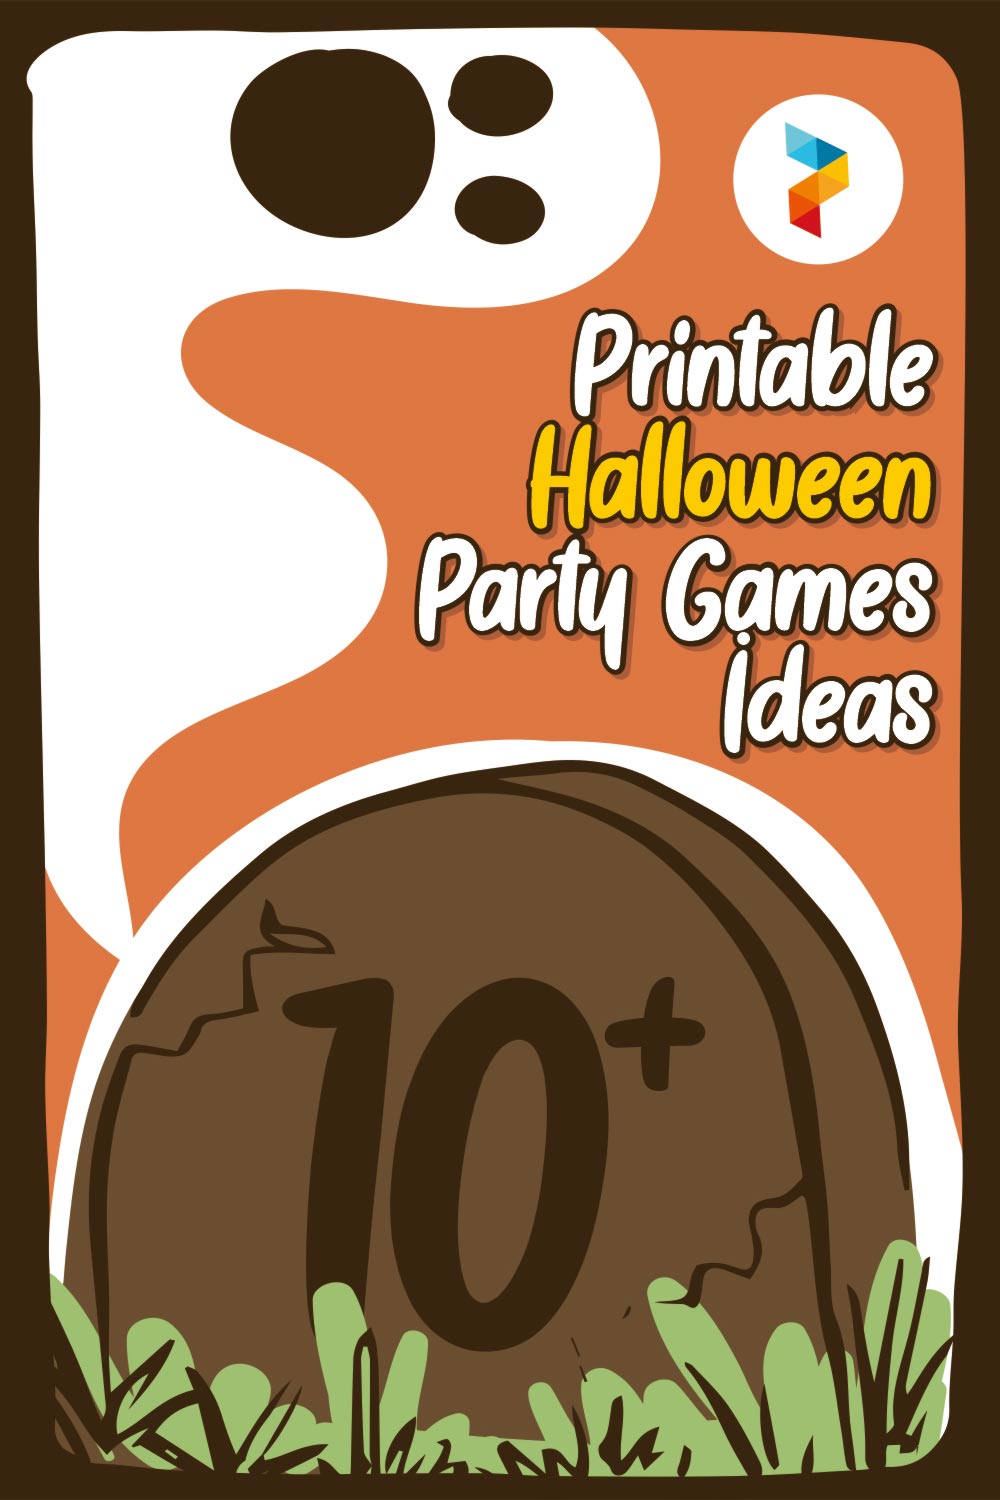 Printable Halloween Party Games Ideas